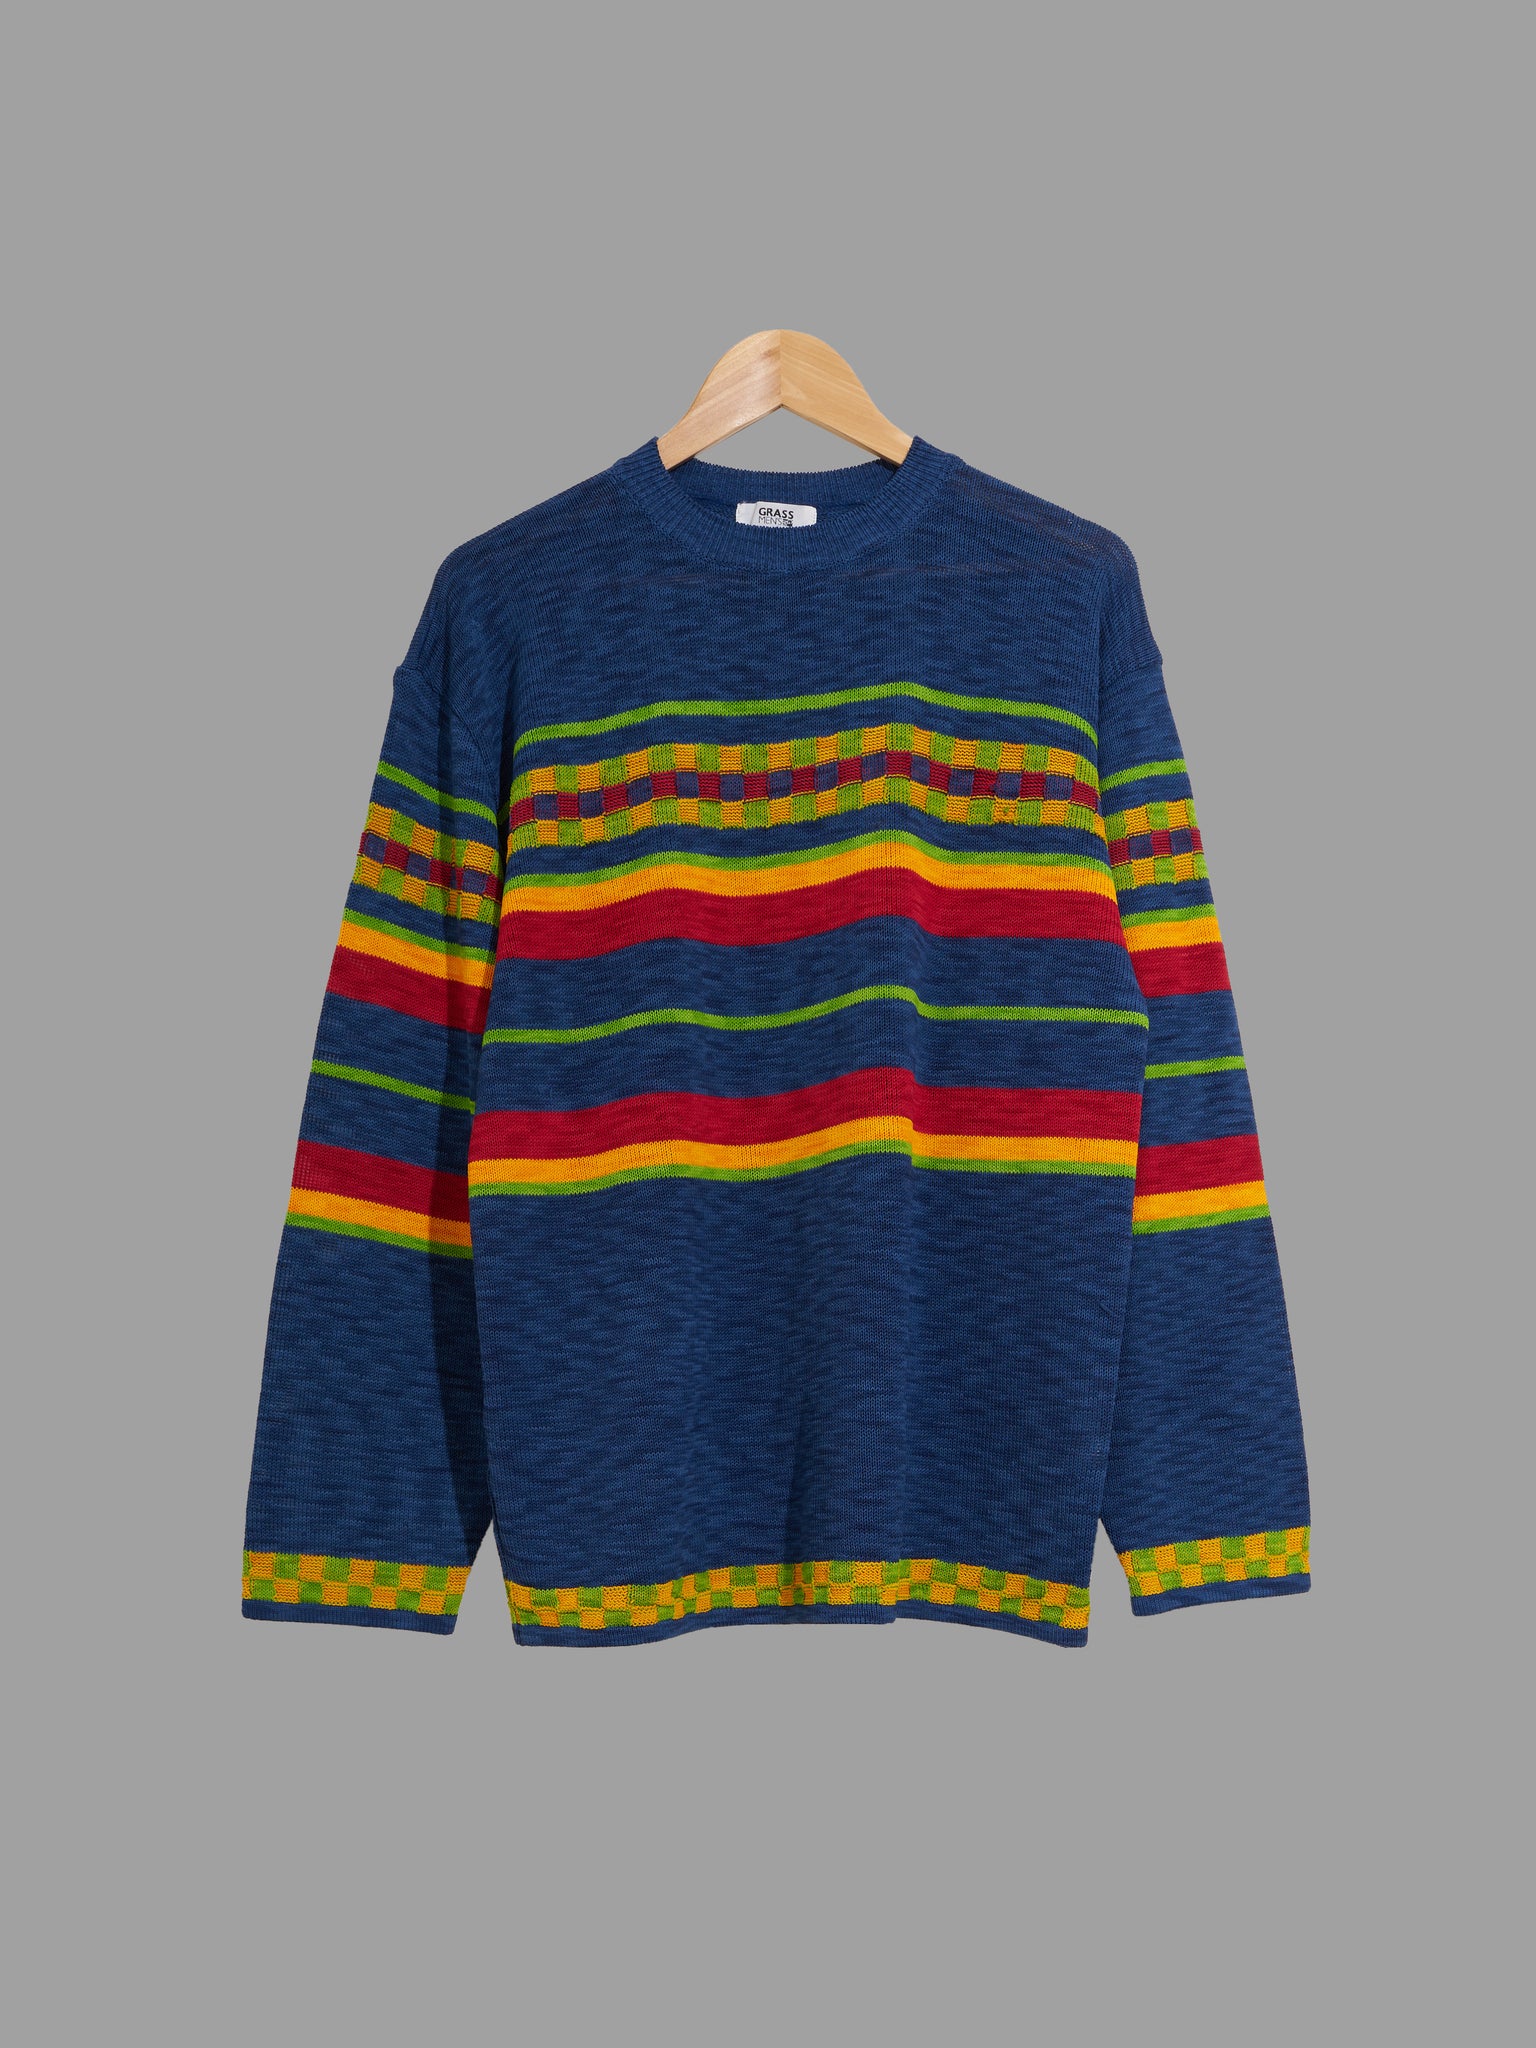 Grass Men’s 1990s blue acrylic multicolour horizontal stripe sweater - XS S M